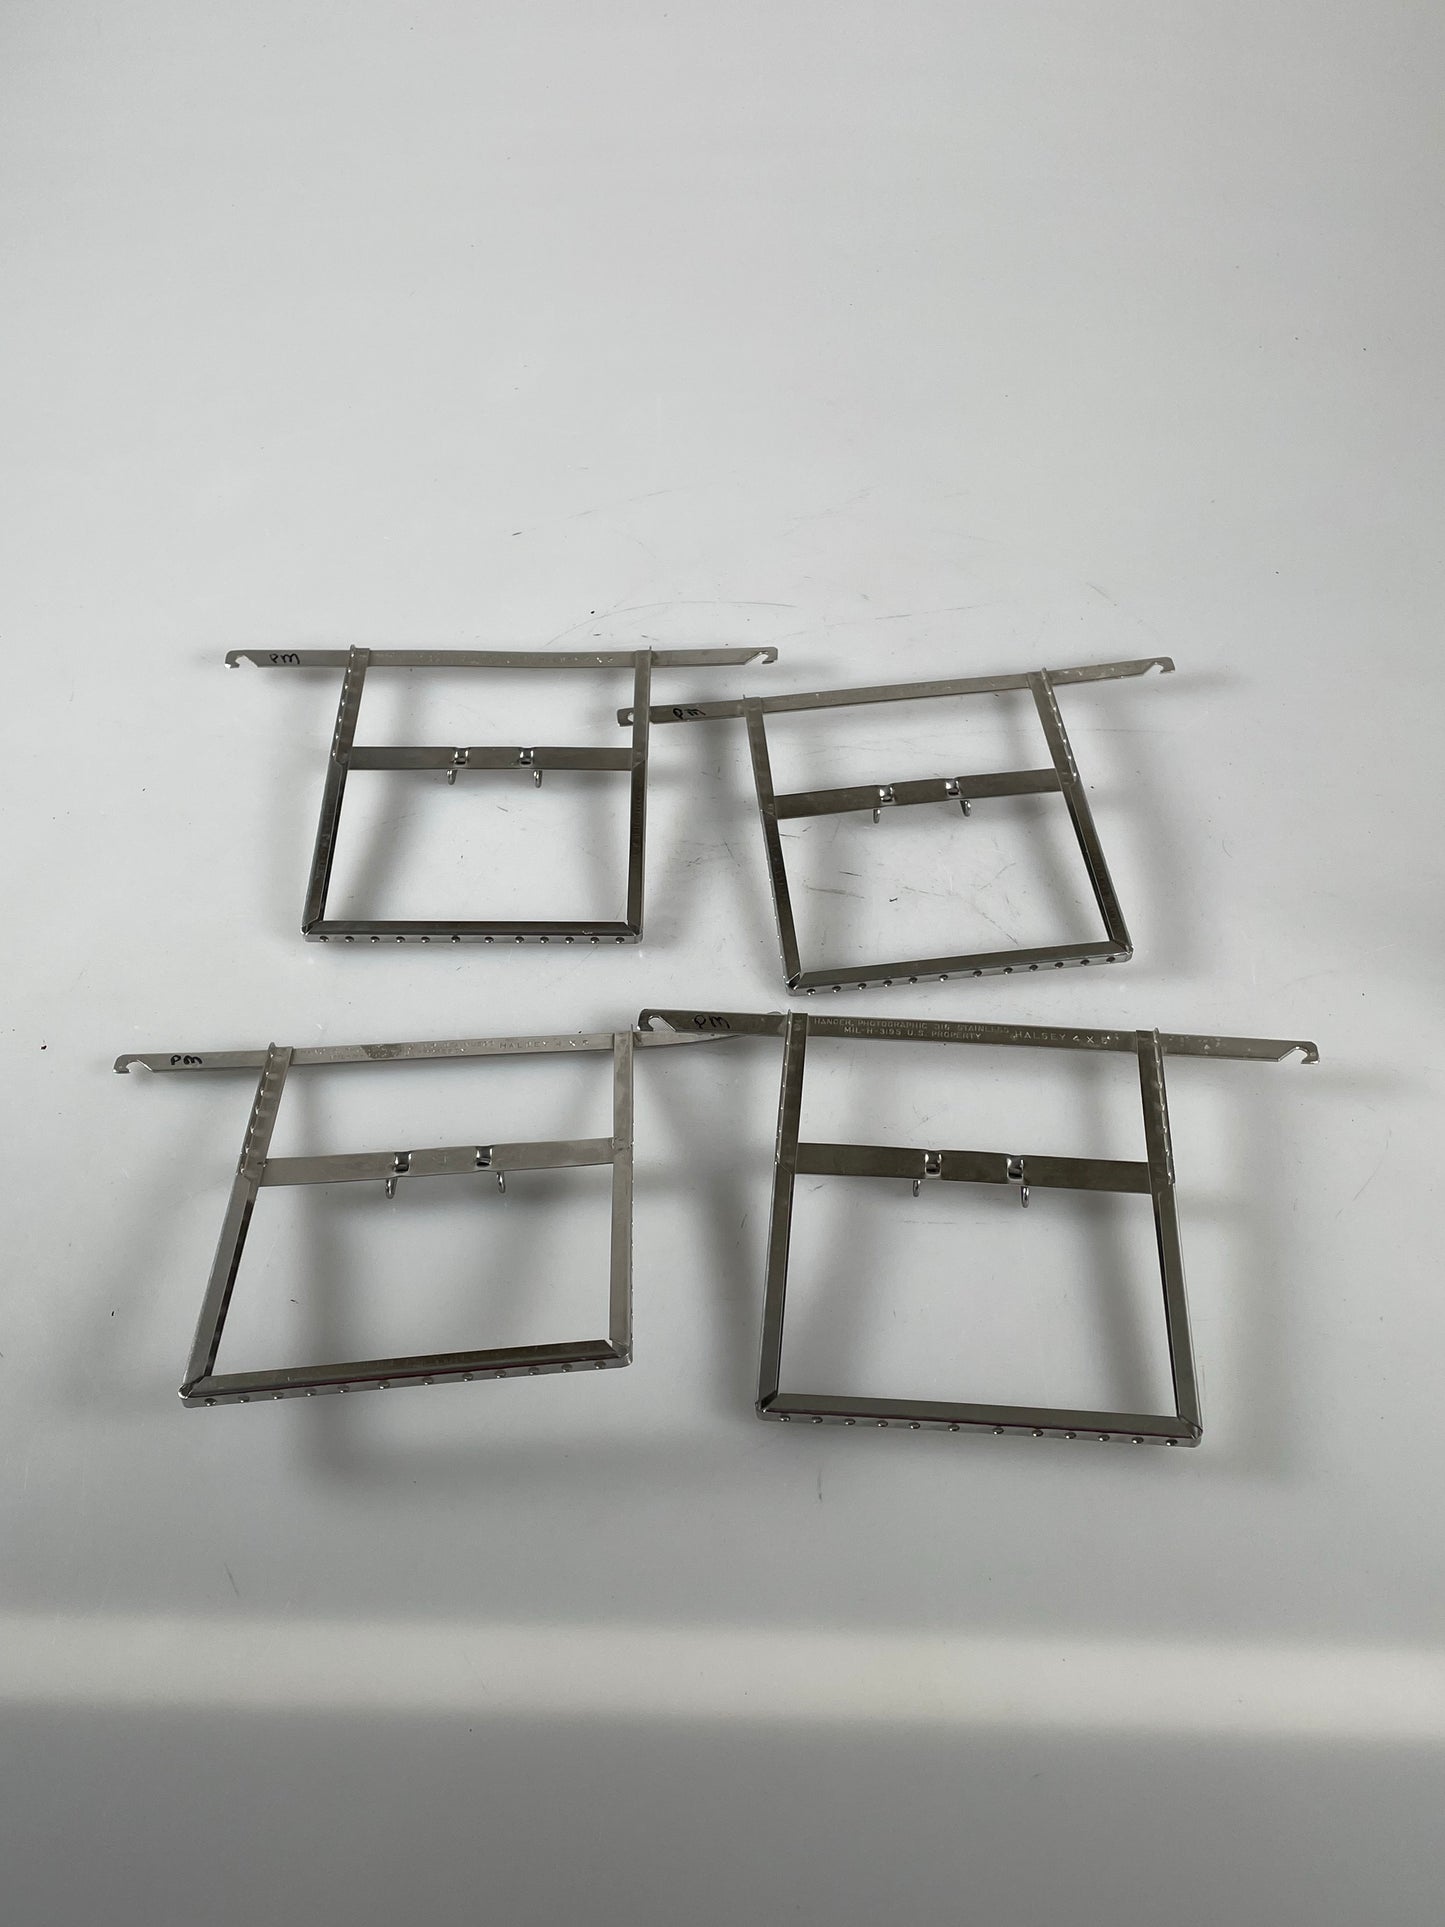 4X5 Type 316 Stainless Steel Halsey Film Hangers - Set of 4 Military